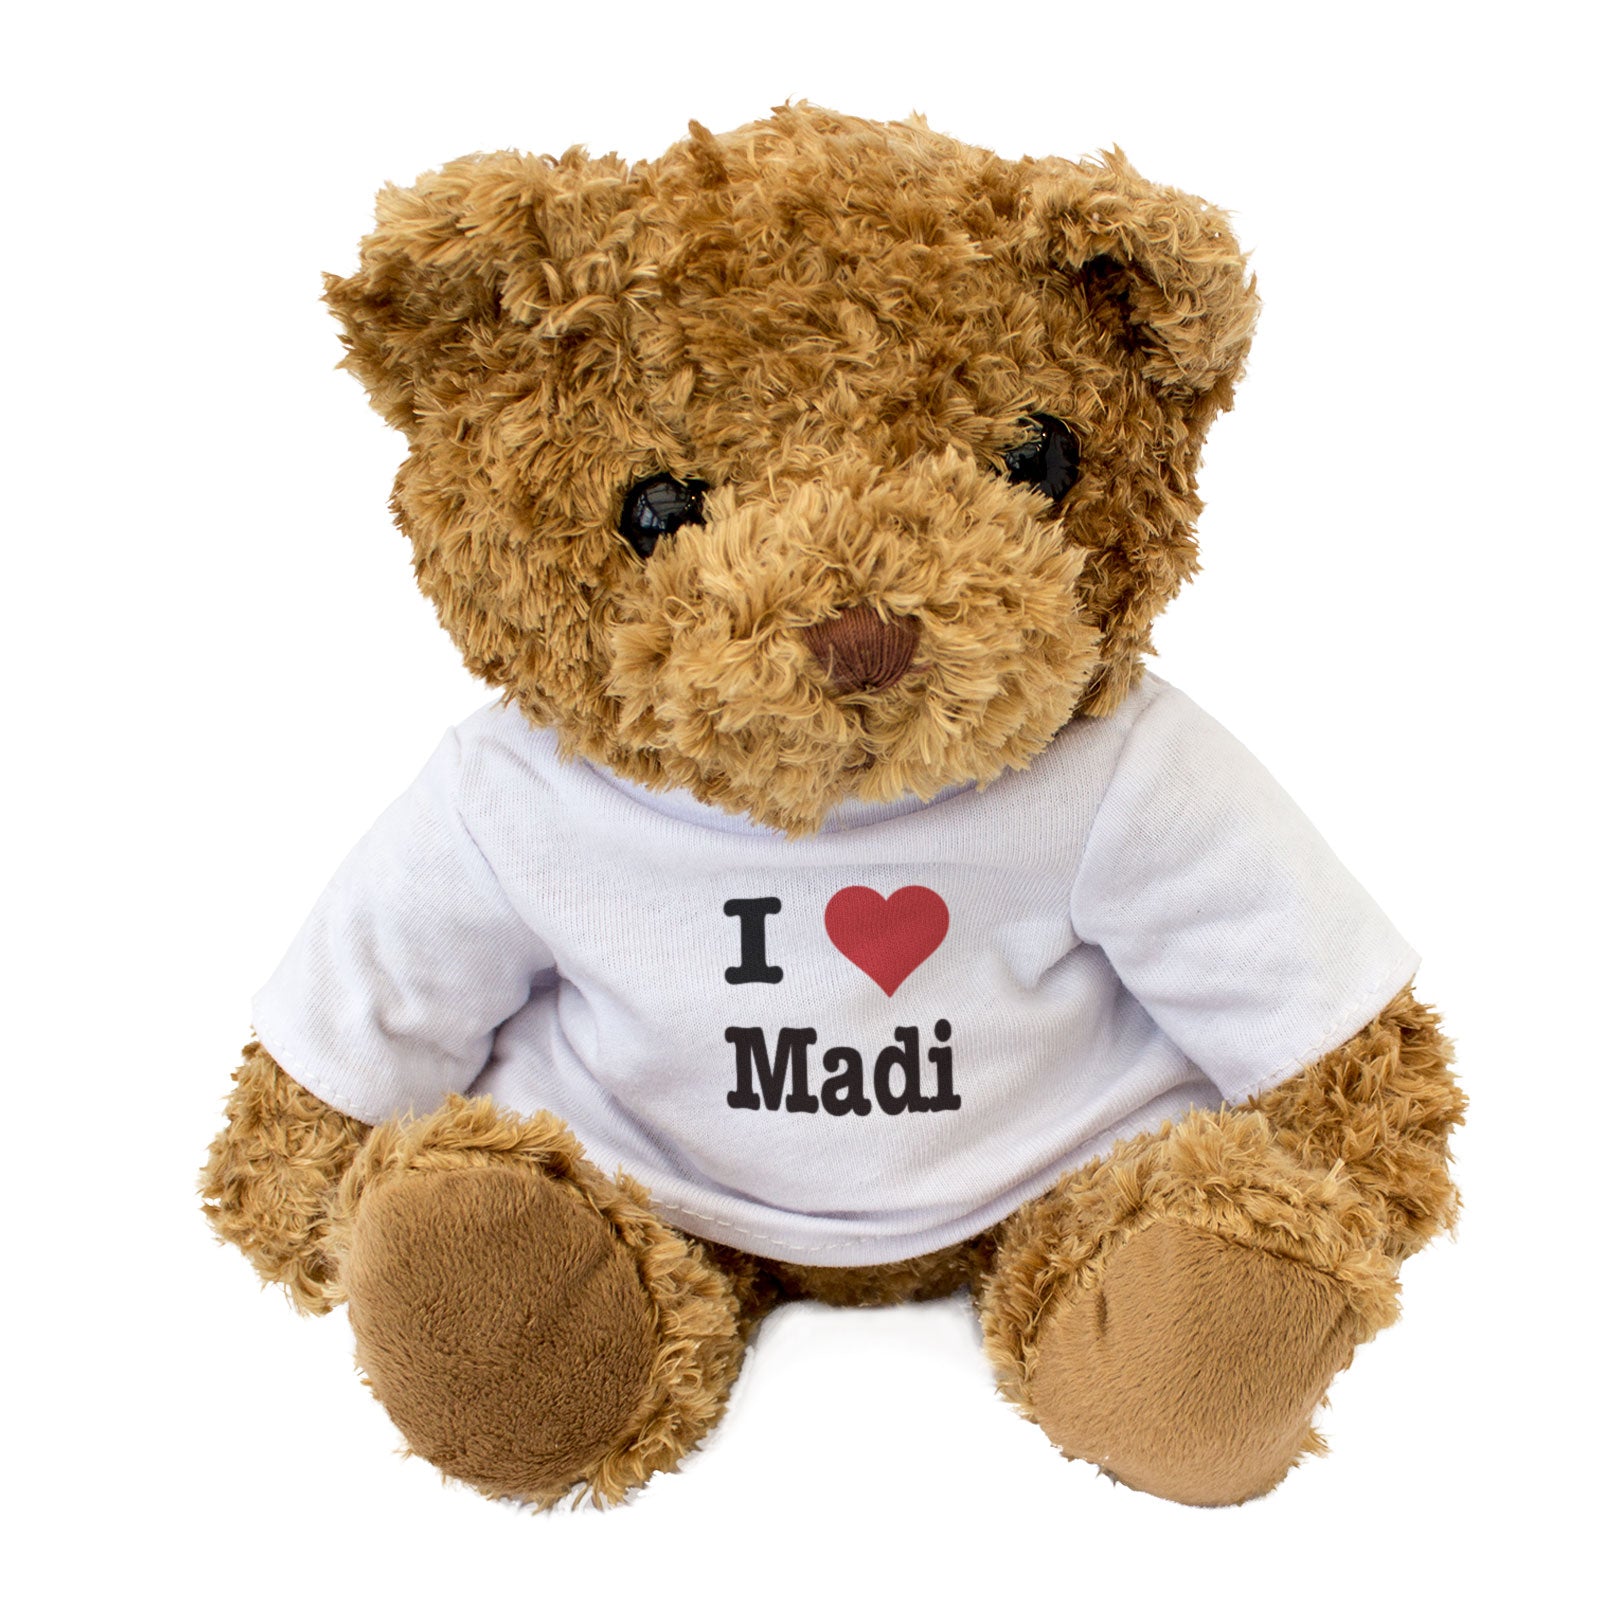 I Love Madi - Teddy Bear